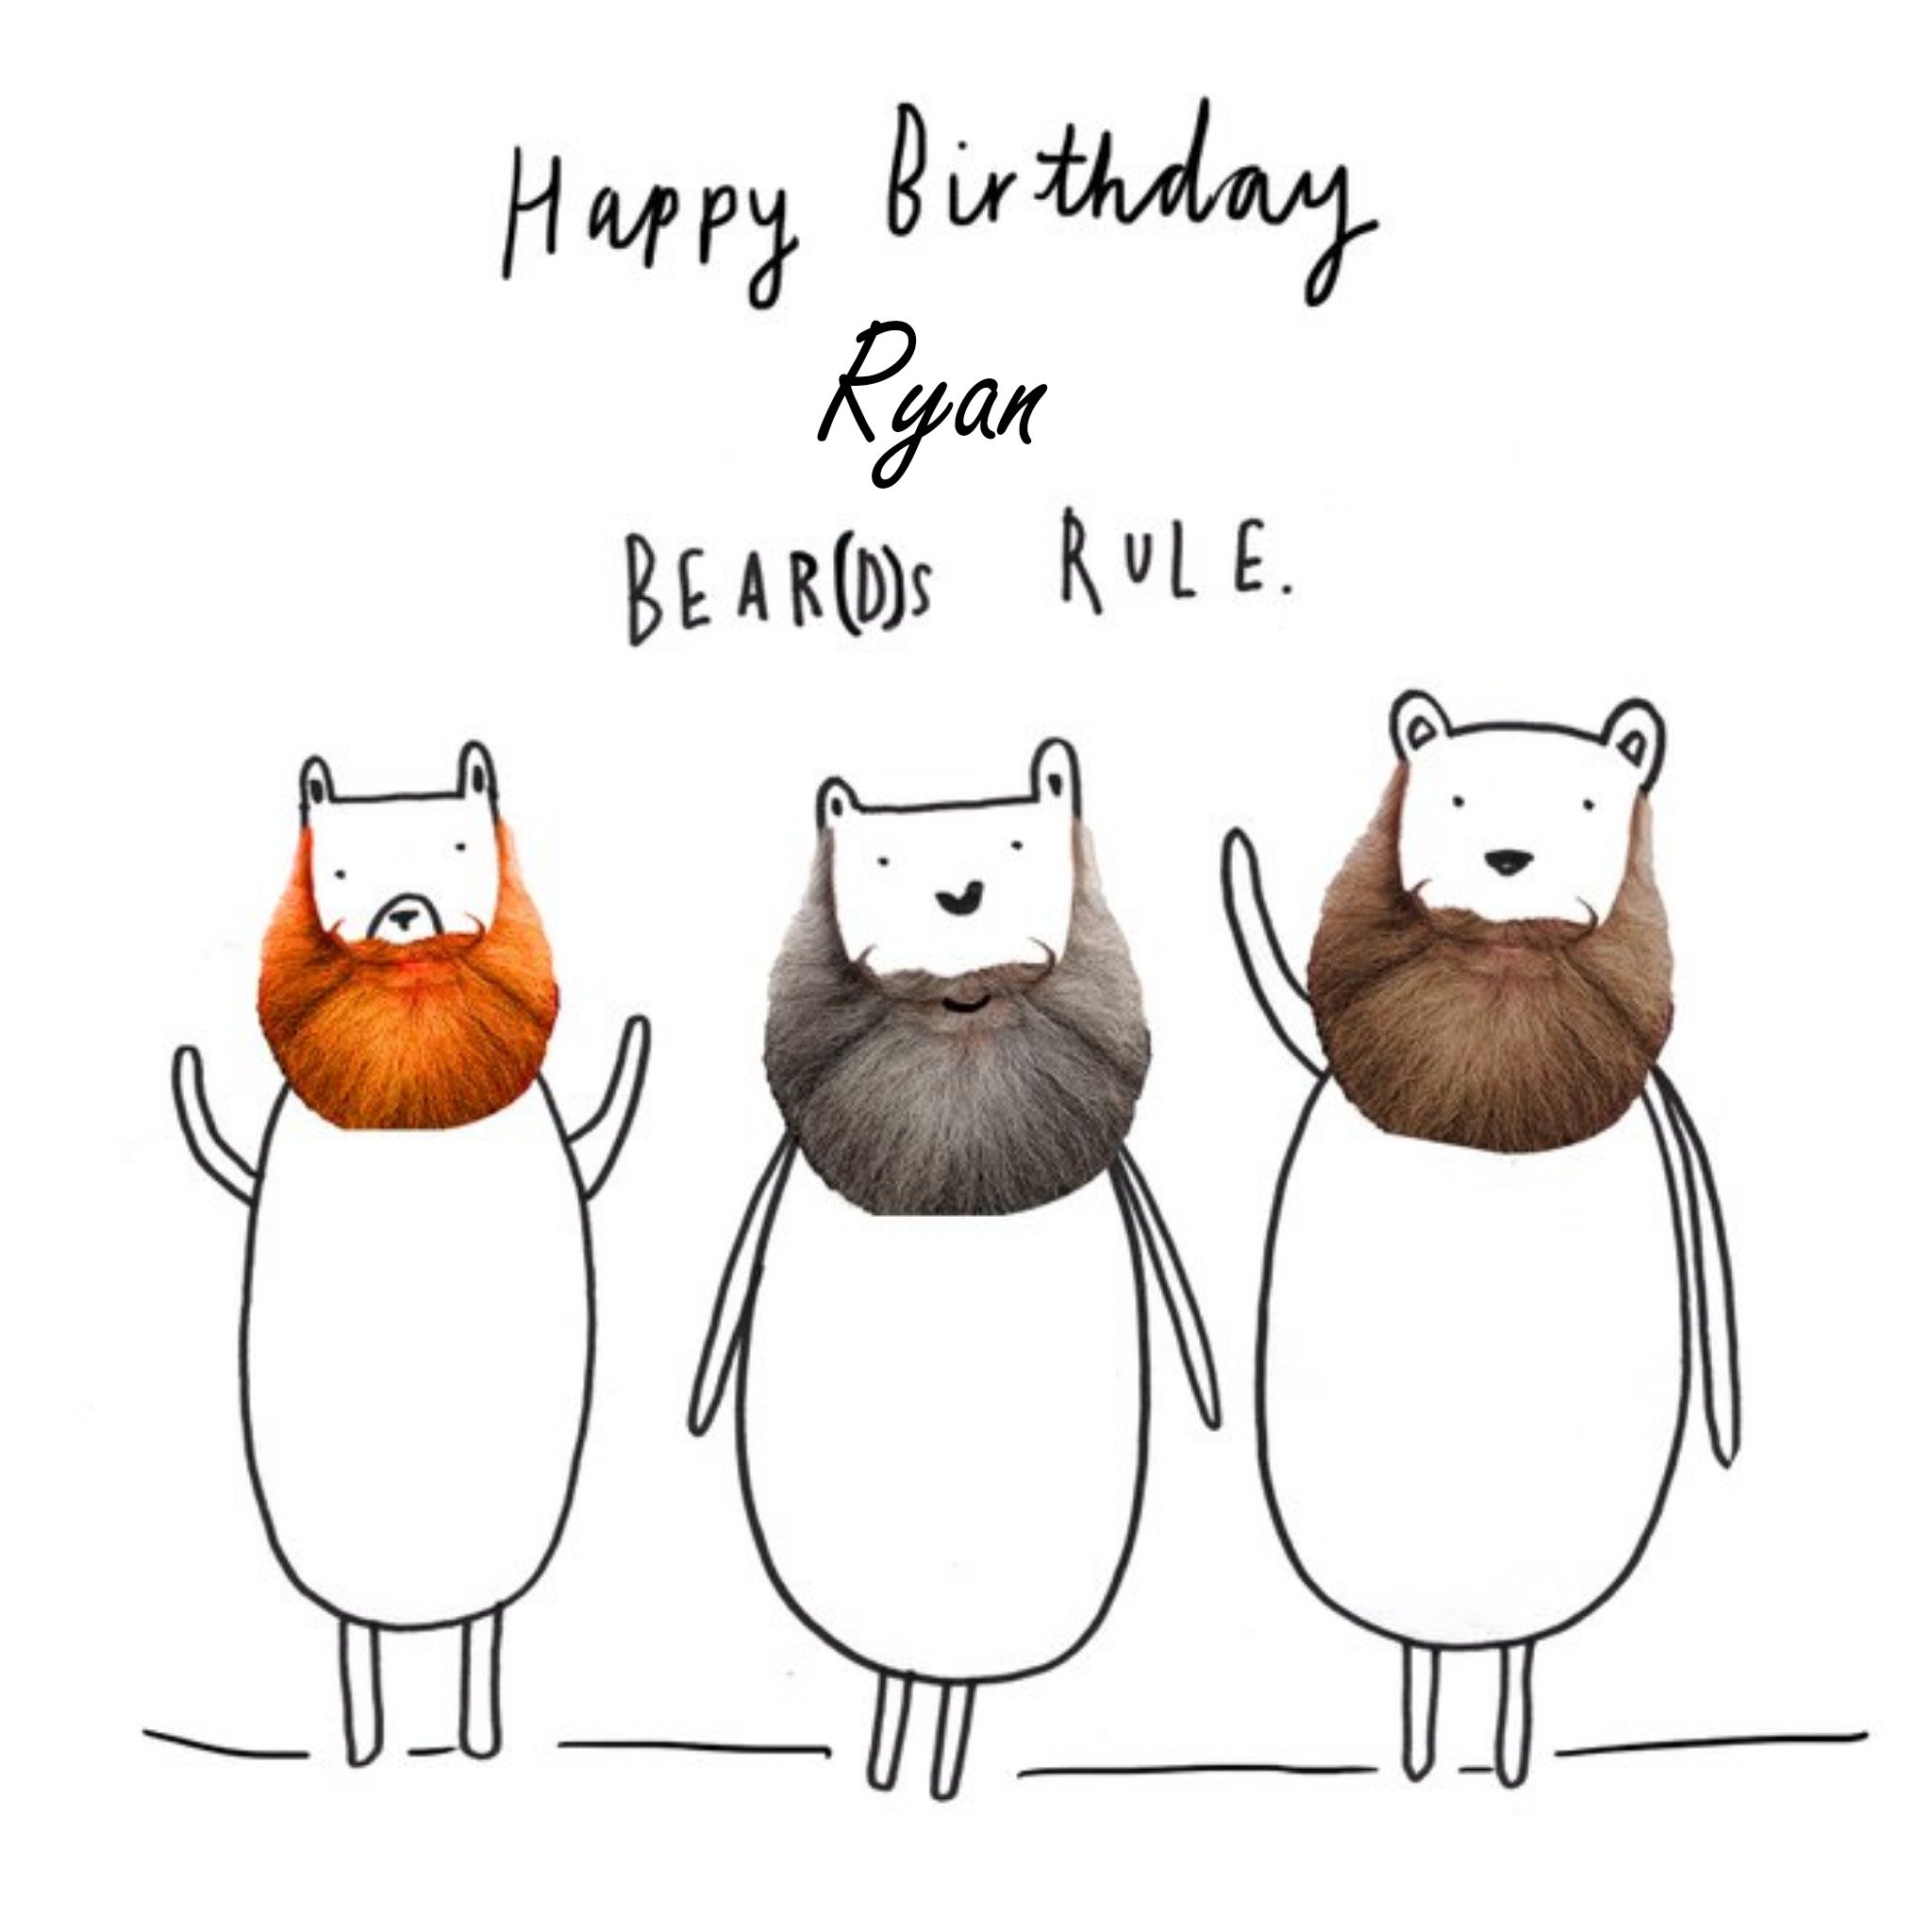 Moonpig Beards Rule Personalised Birthday Card, Square